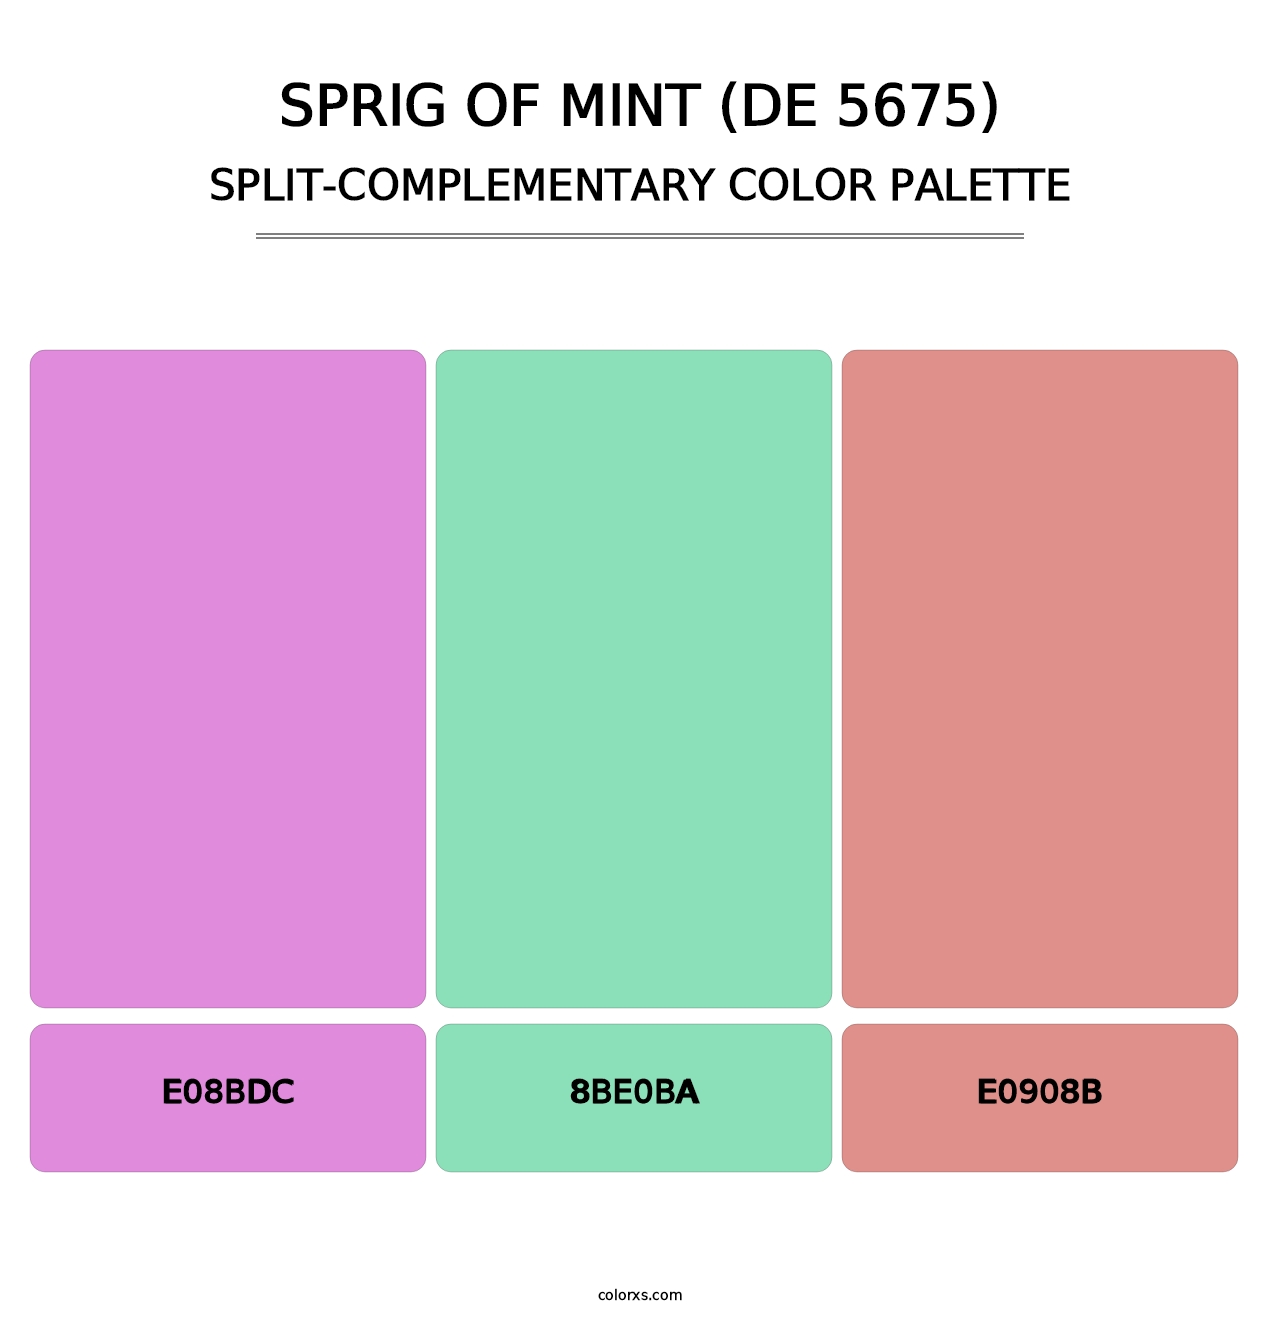 Sprig of Mint (DE 5675) - Split-Complementary Color Palette